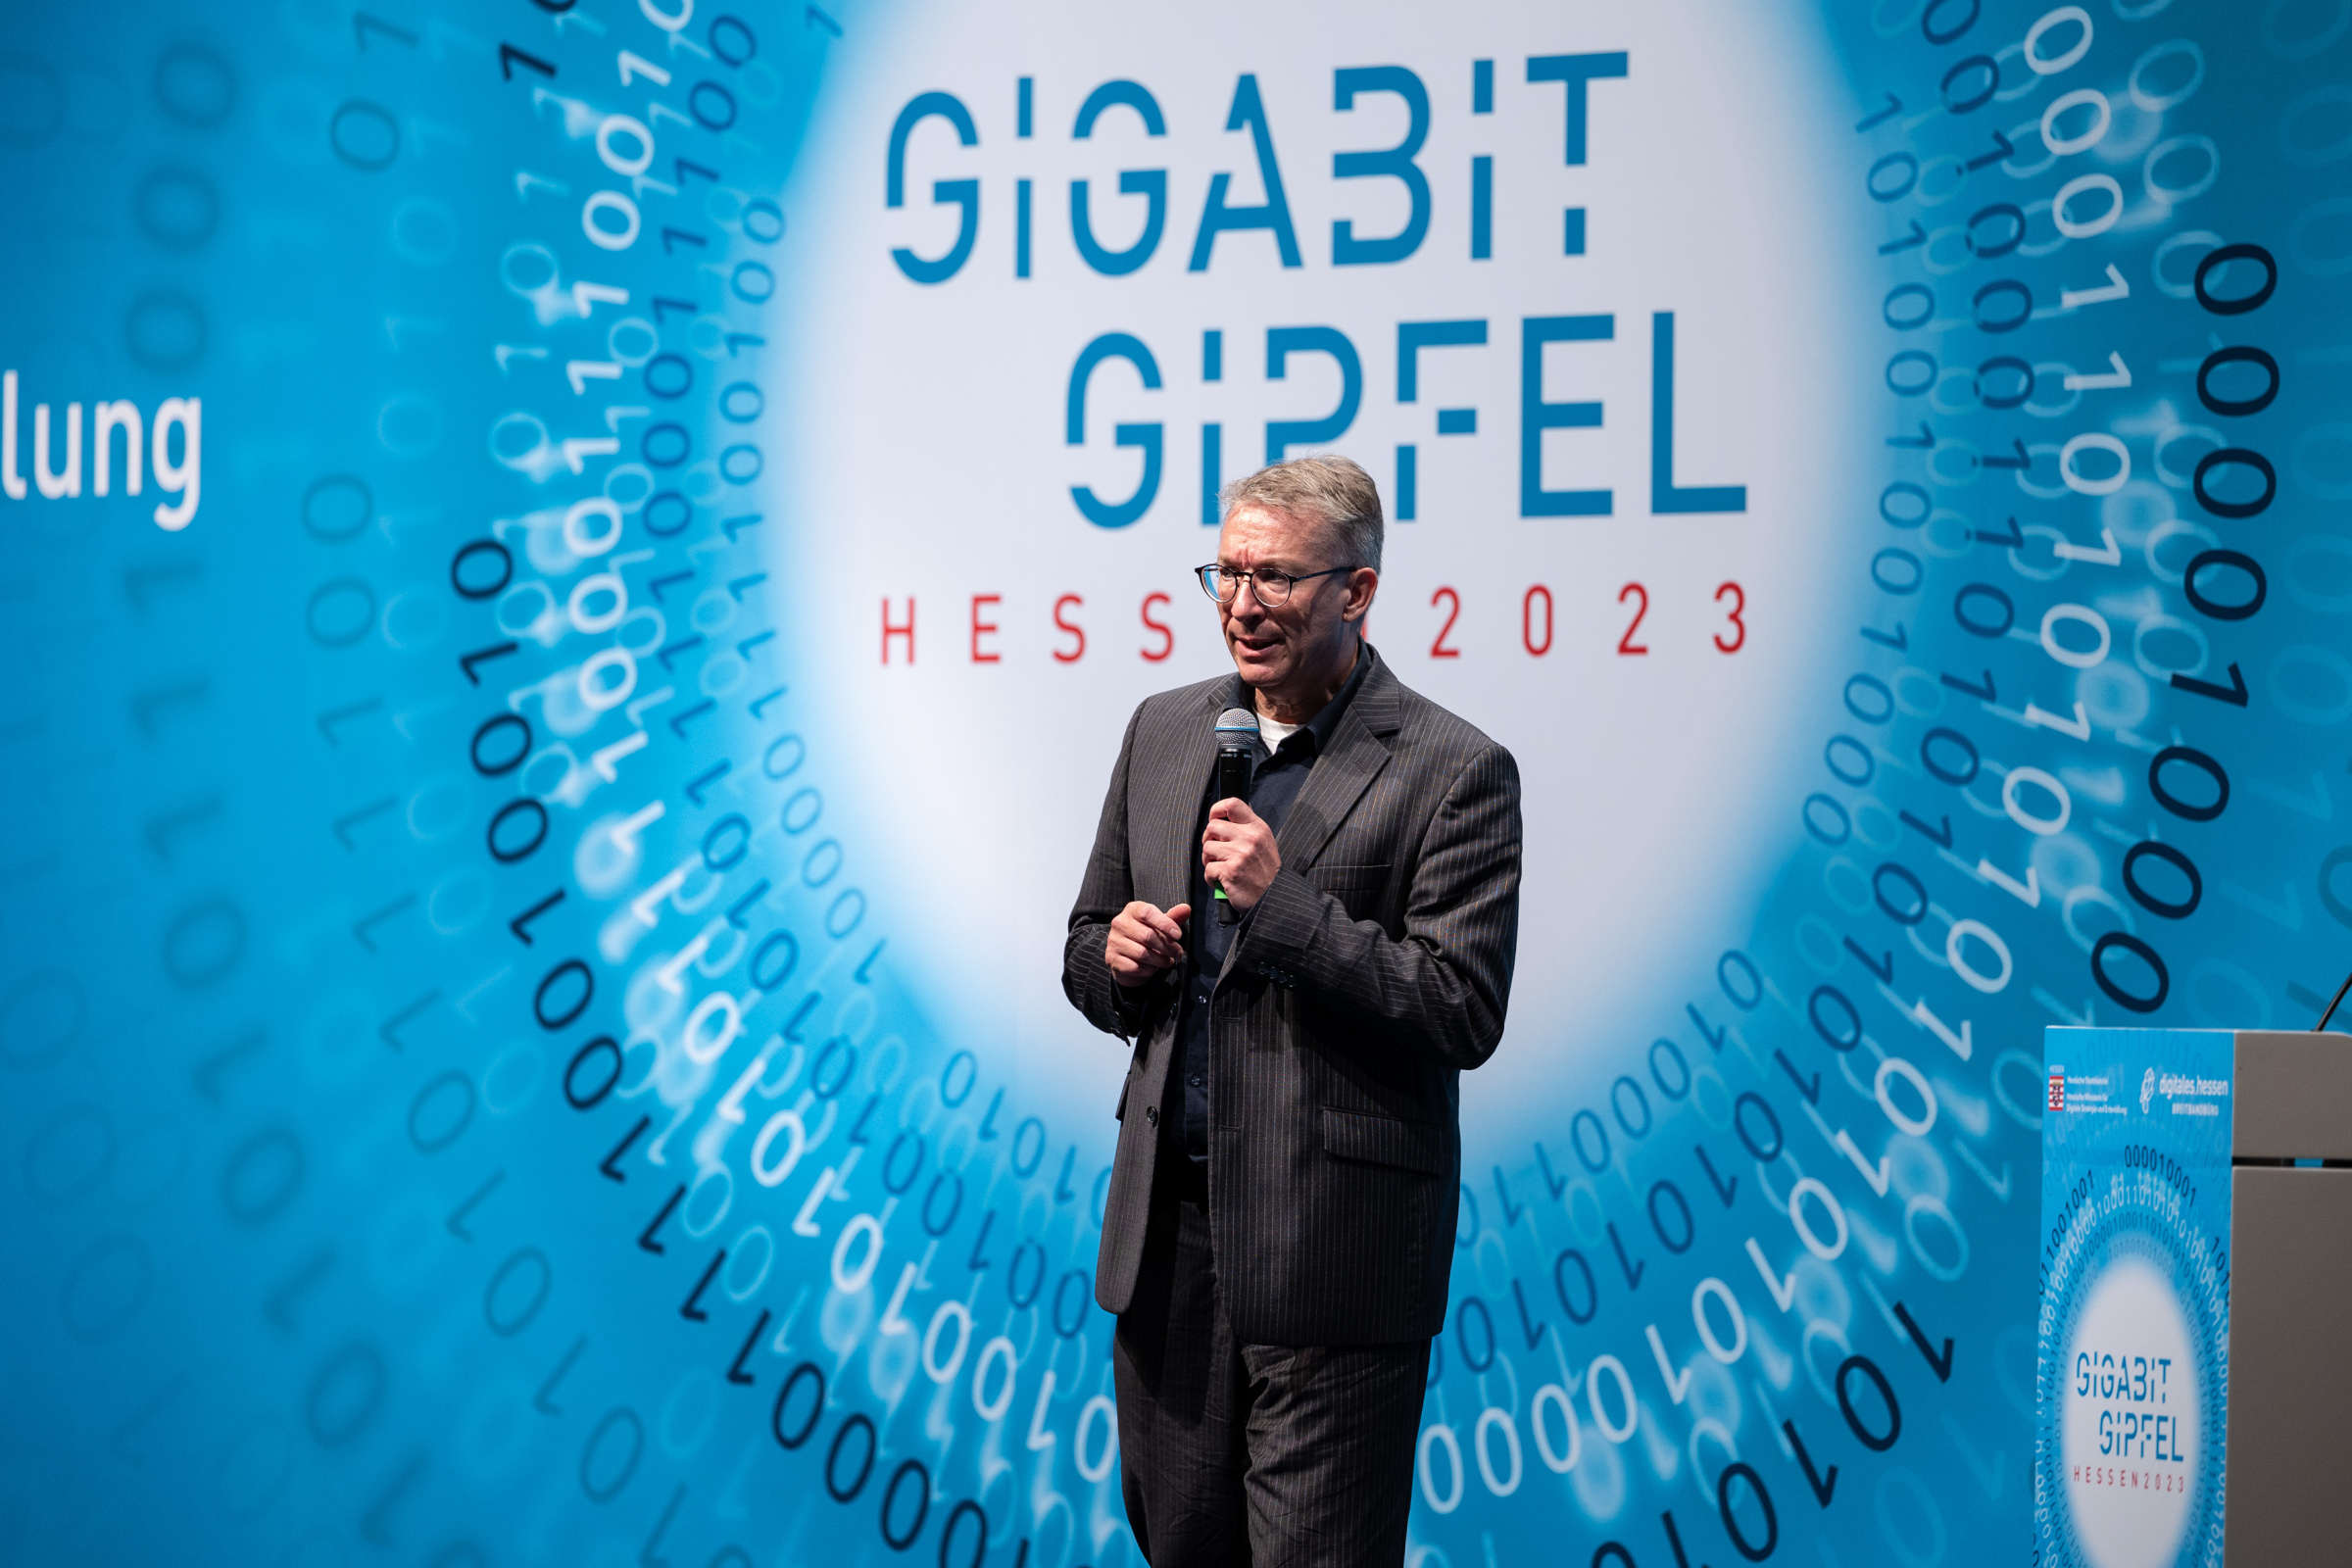 Gigabitgipfel Hessen 2023